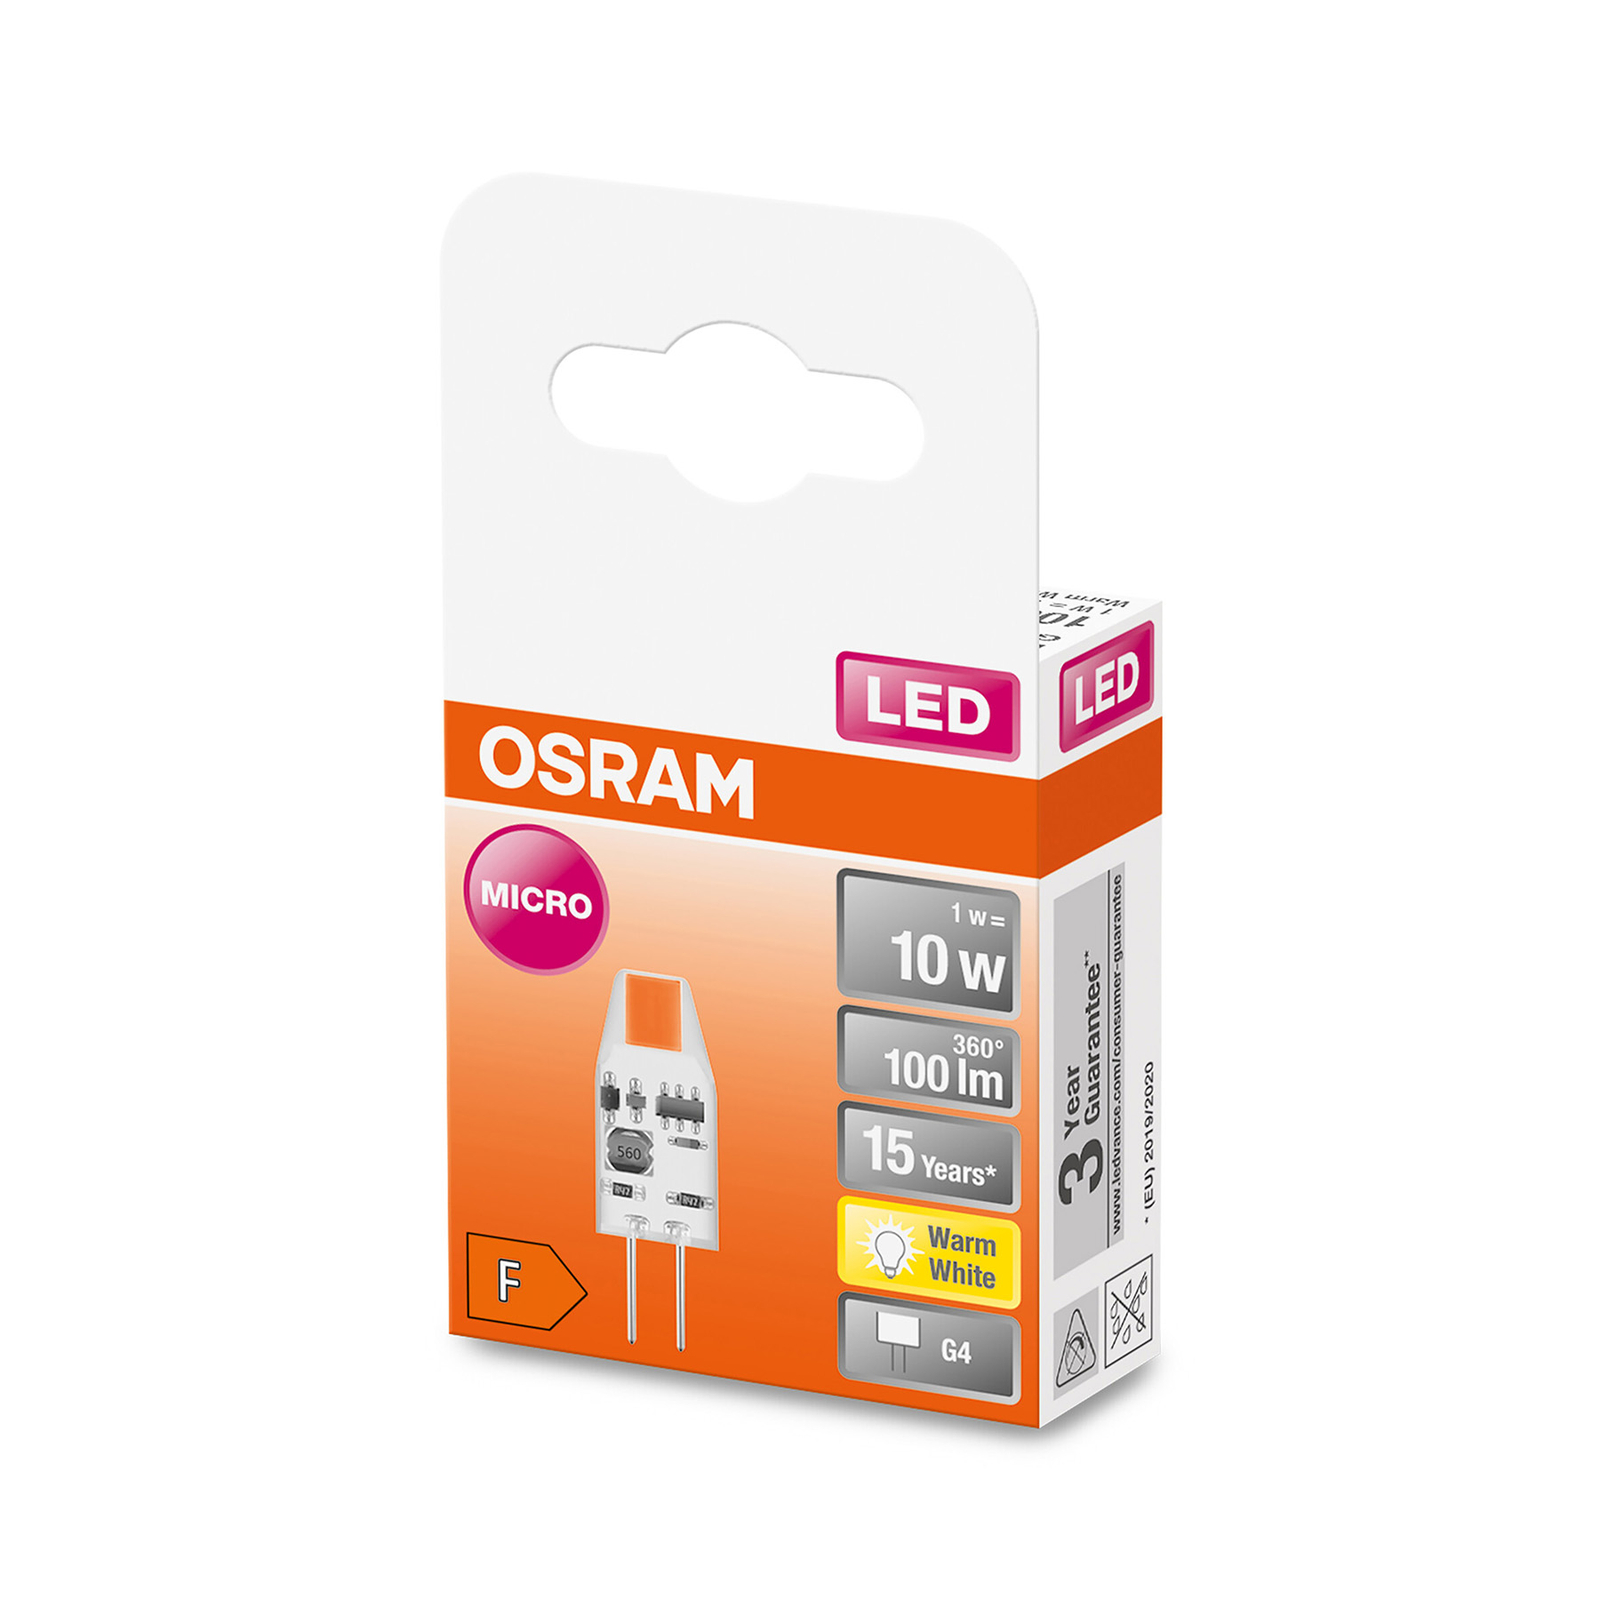 OSRAM PIN Micro LED bispina G4 1W 100lm 2.700K